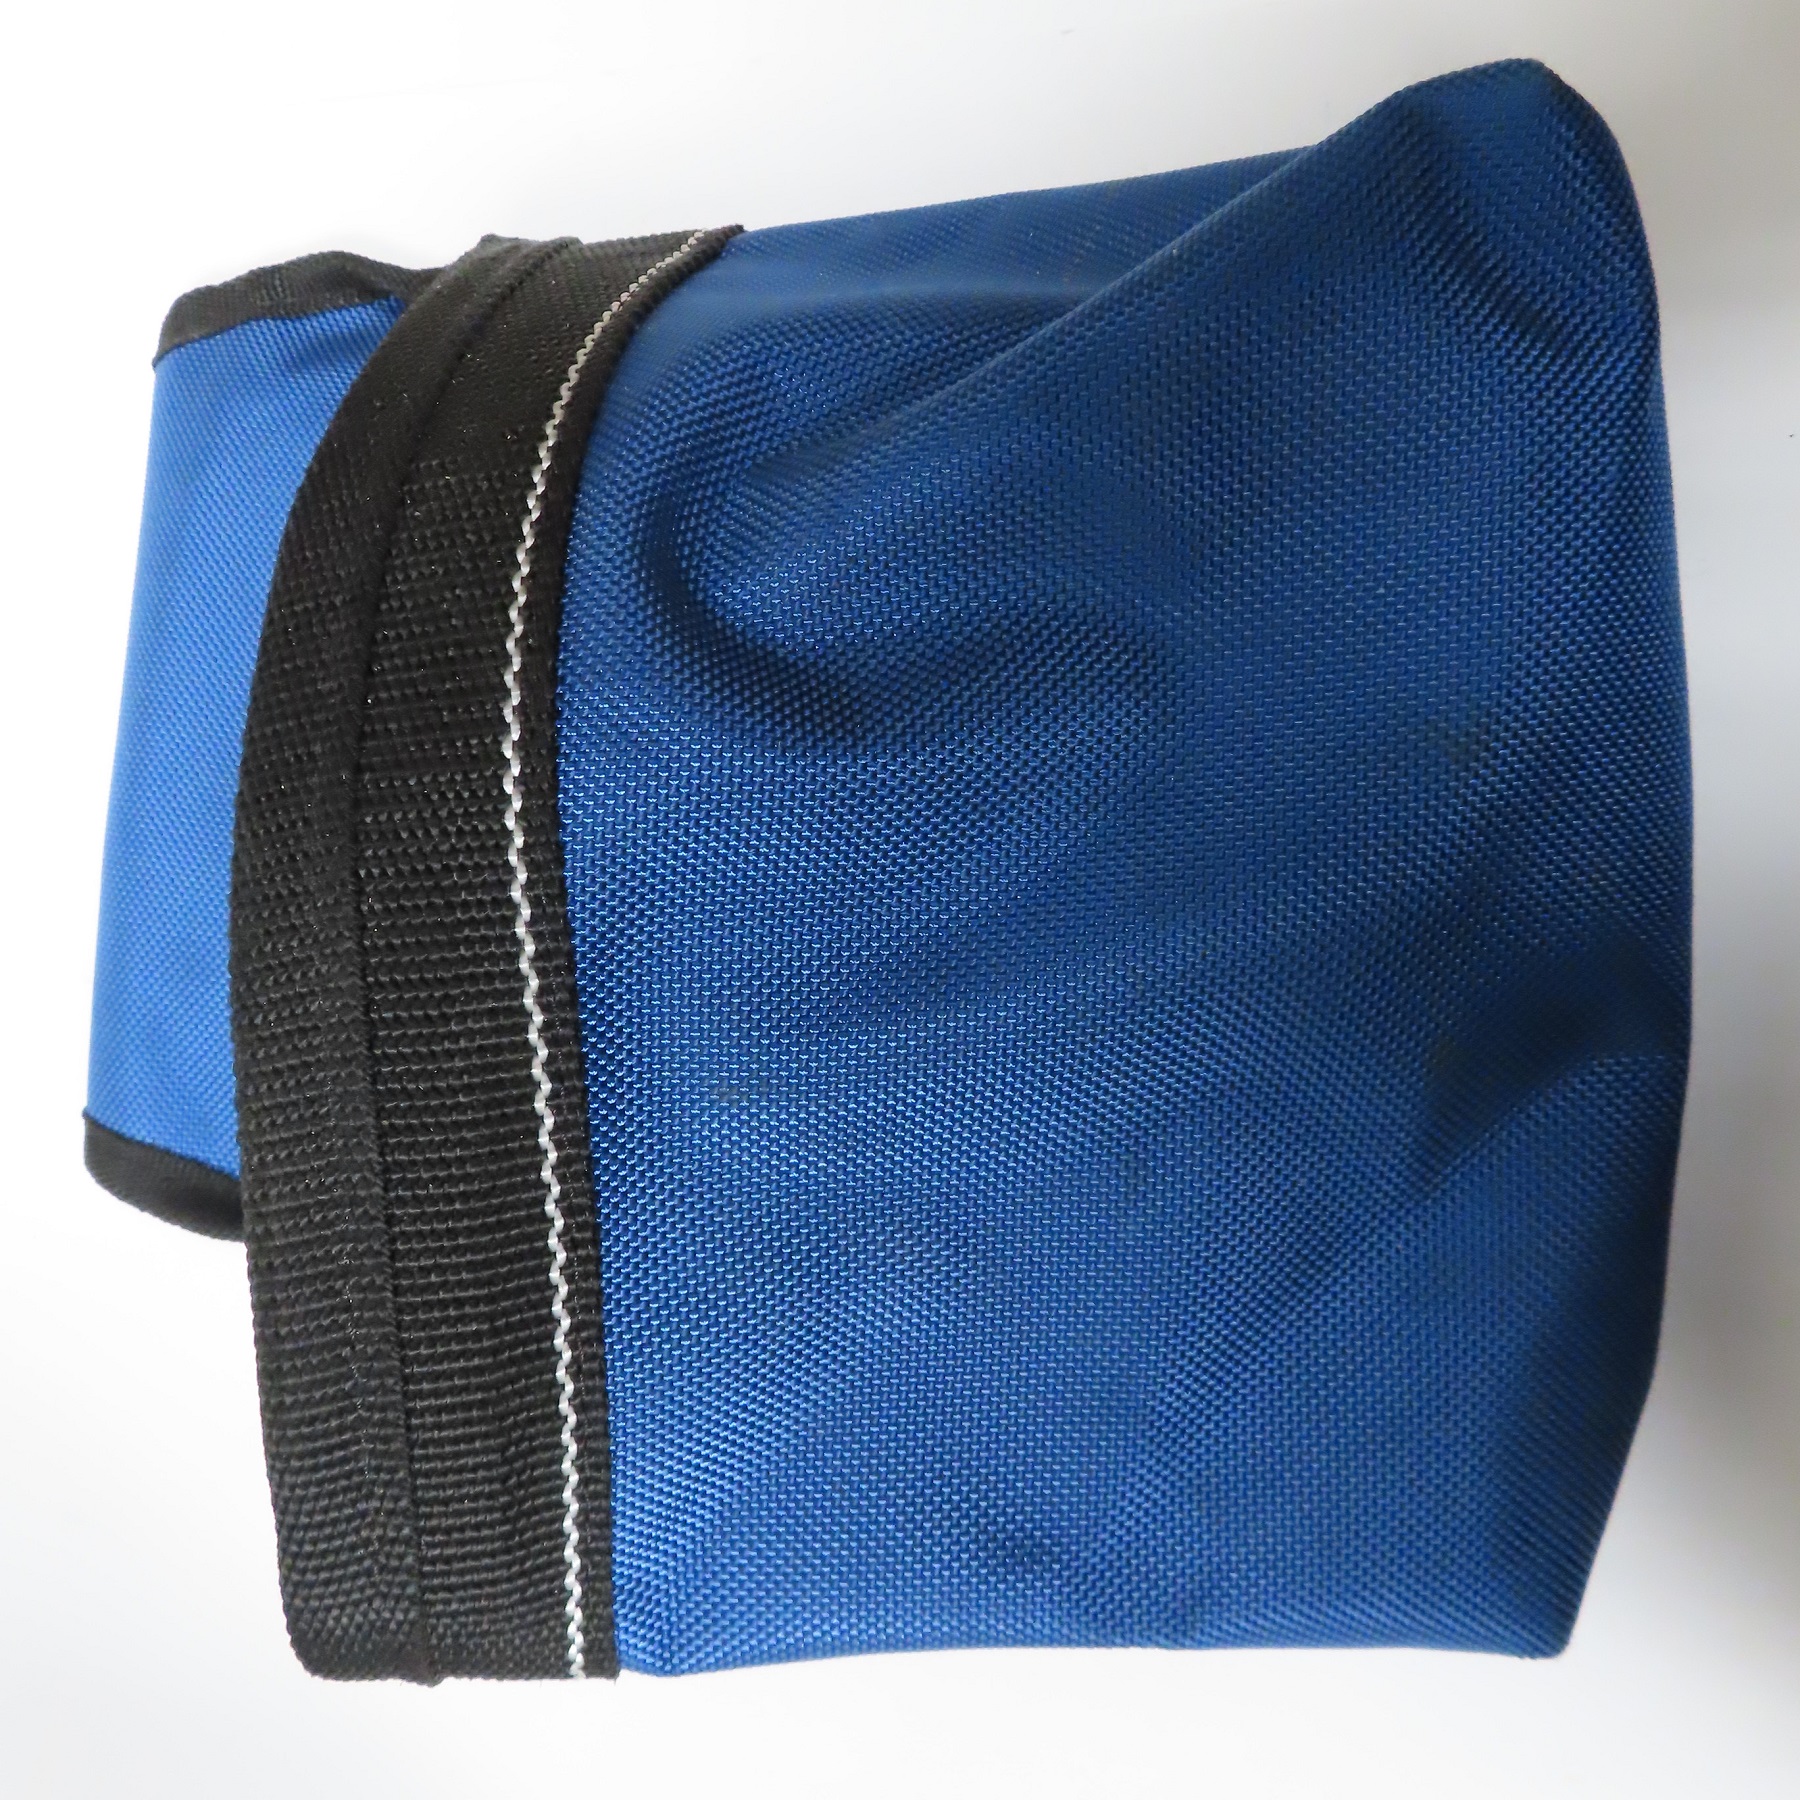 Bucketboss 55185 3-Bag Framer's Suspension Rig Work Tool Belt - Blue